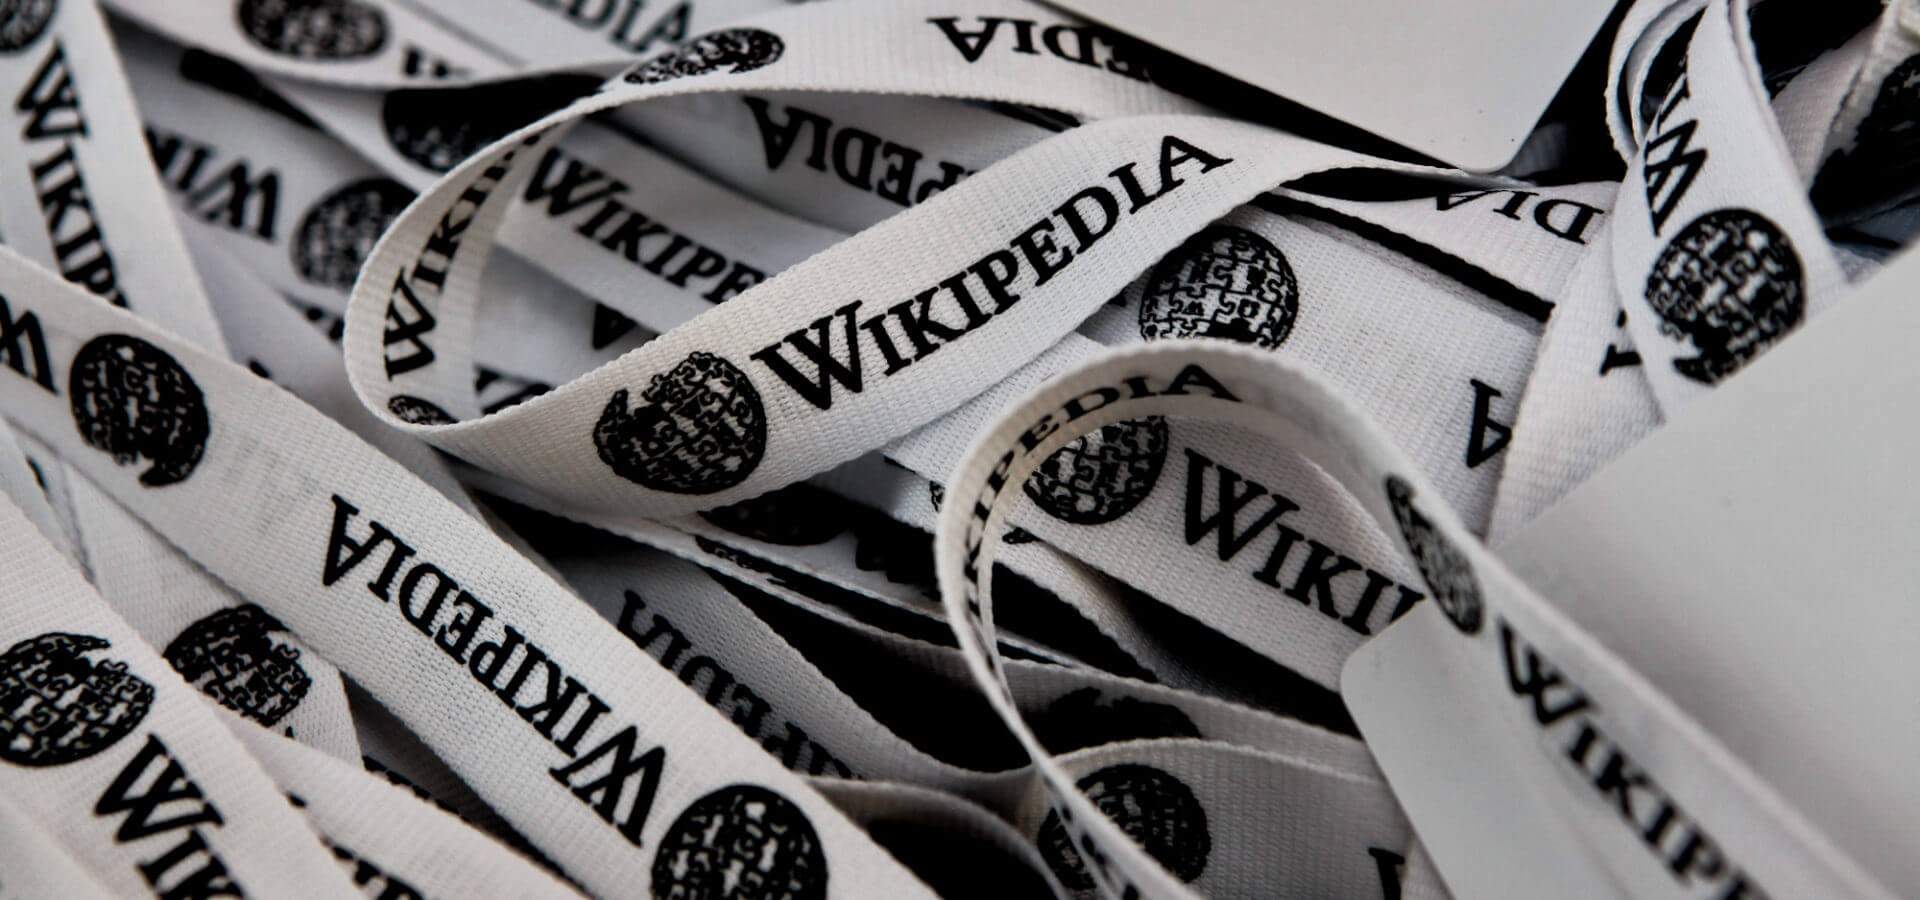 Phillip Cross The Mystery Wikipedia Editor Targeting Anti War Sites